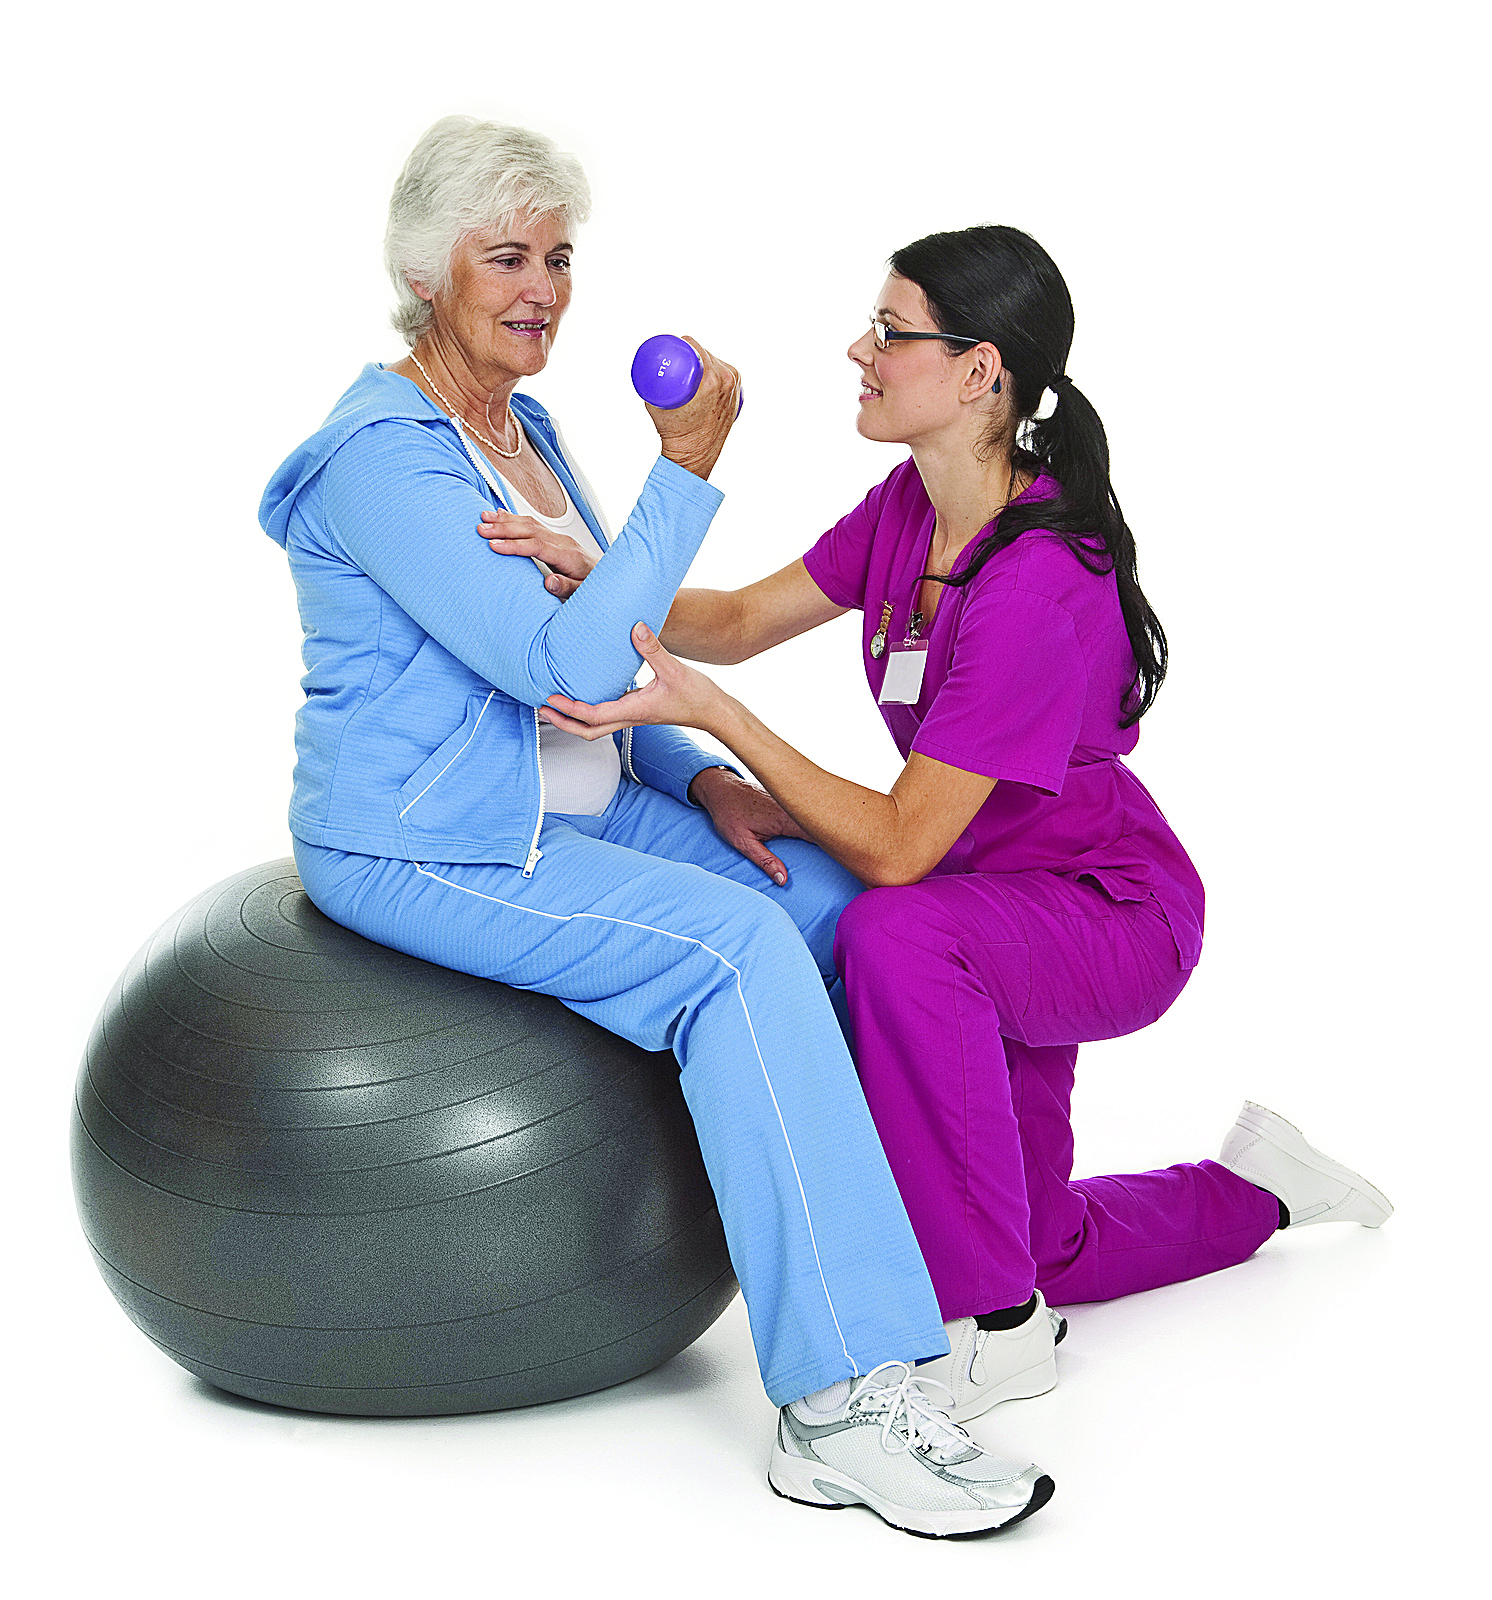 Female health care professional assisting female senior citizen with exercise technique.